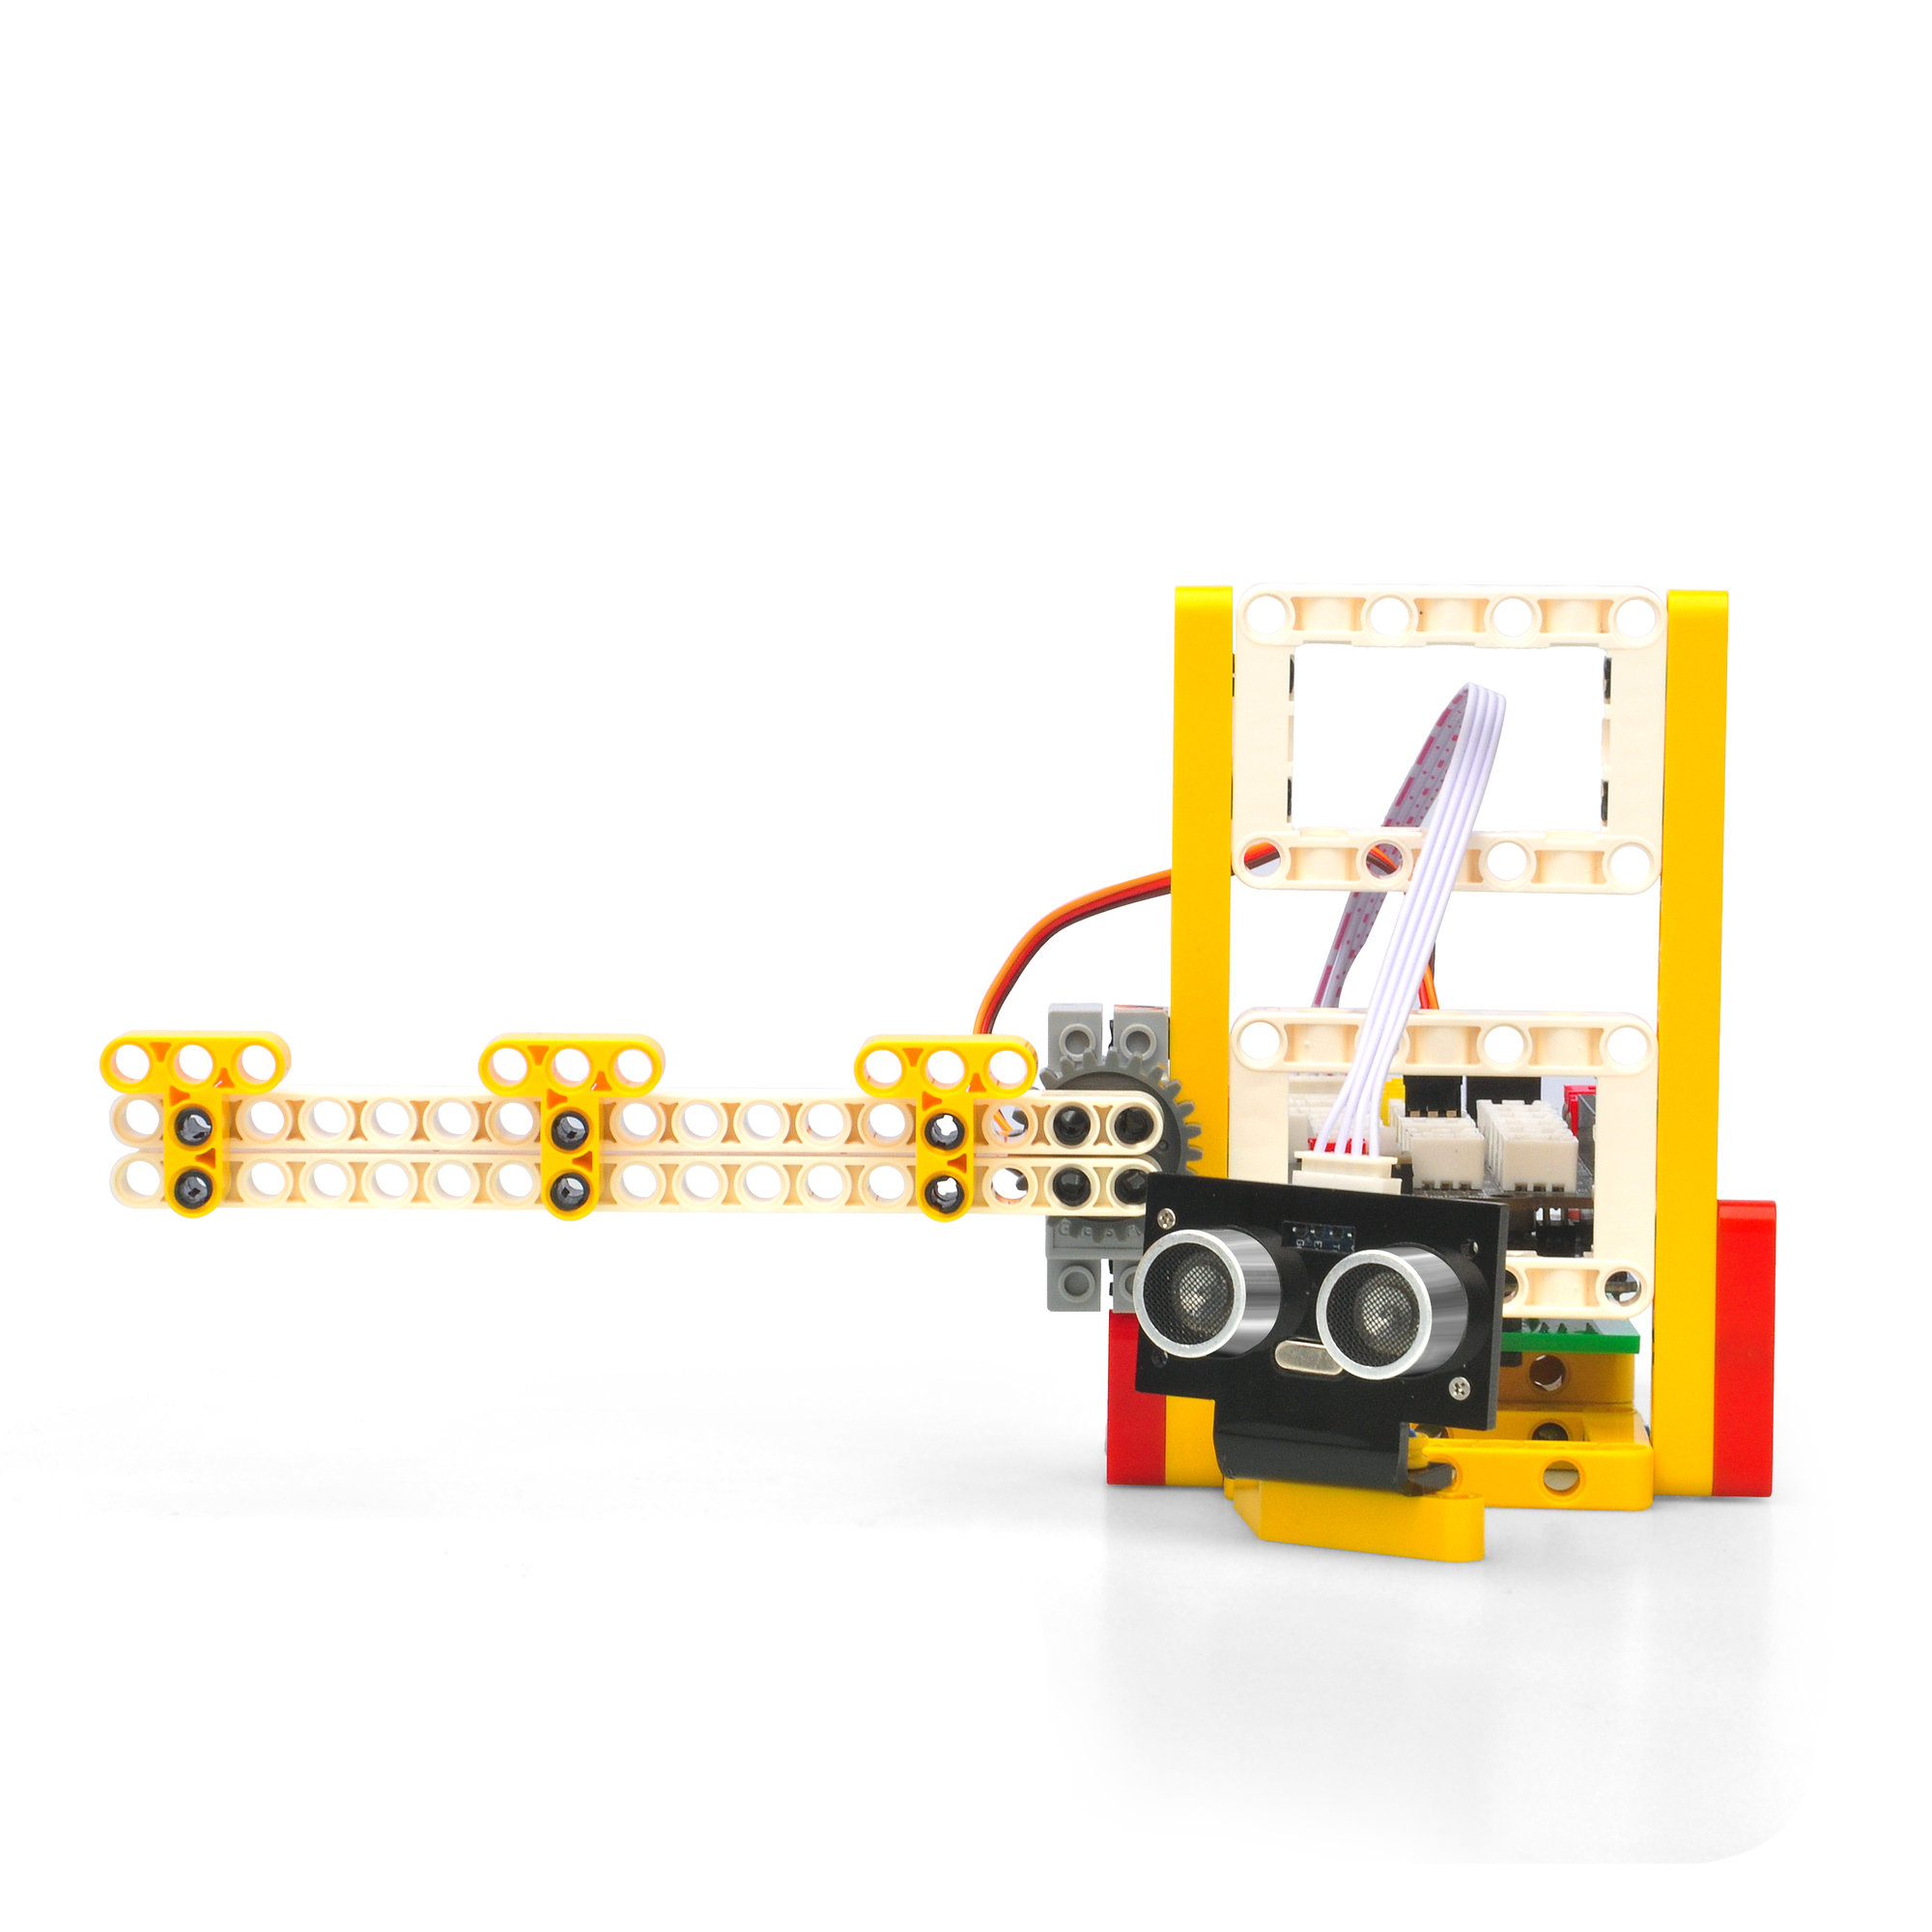 OSOYOO Building Block DIY Programming Kit per Arduino Lezione 1: Smart Gate